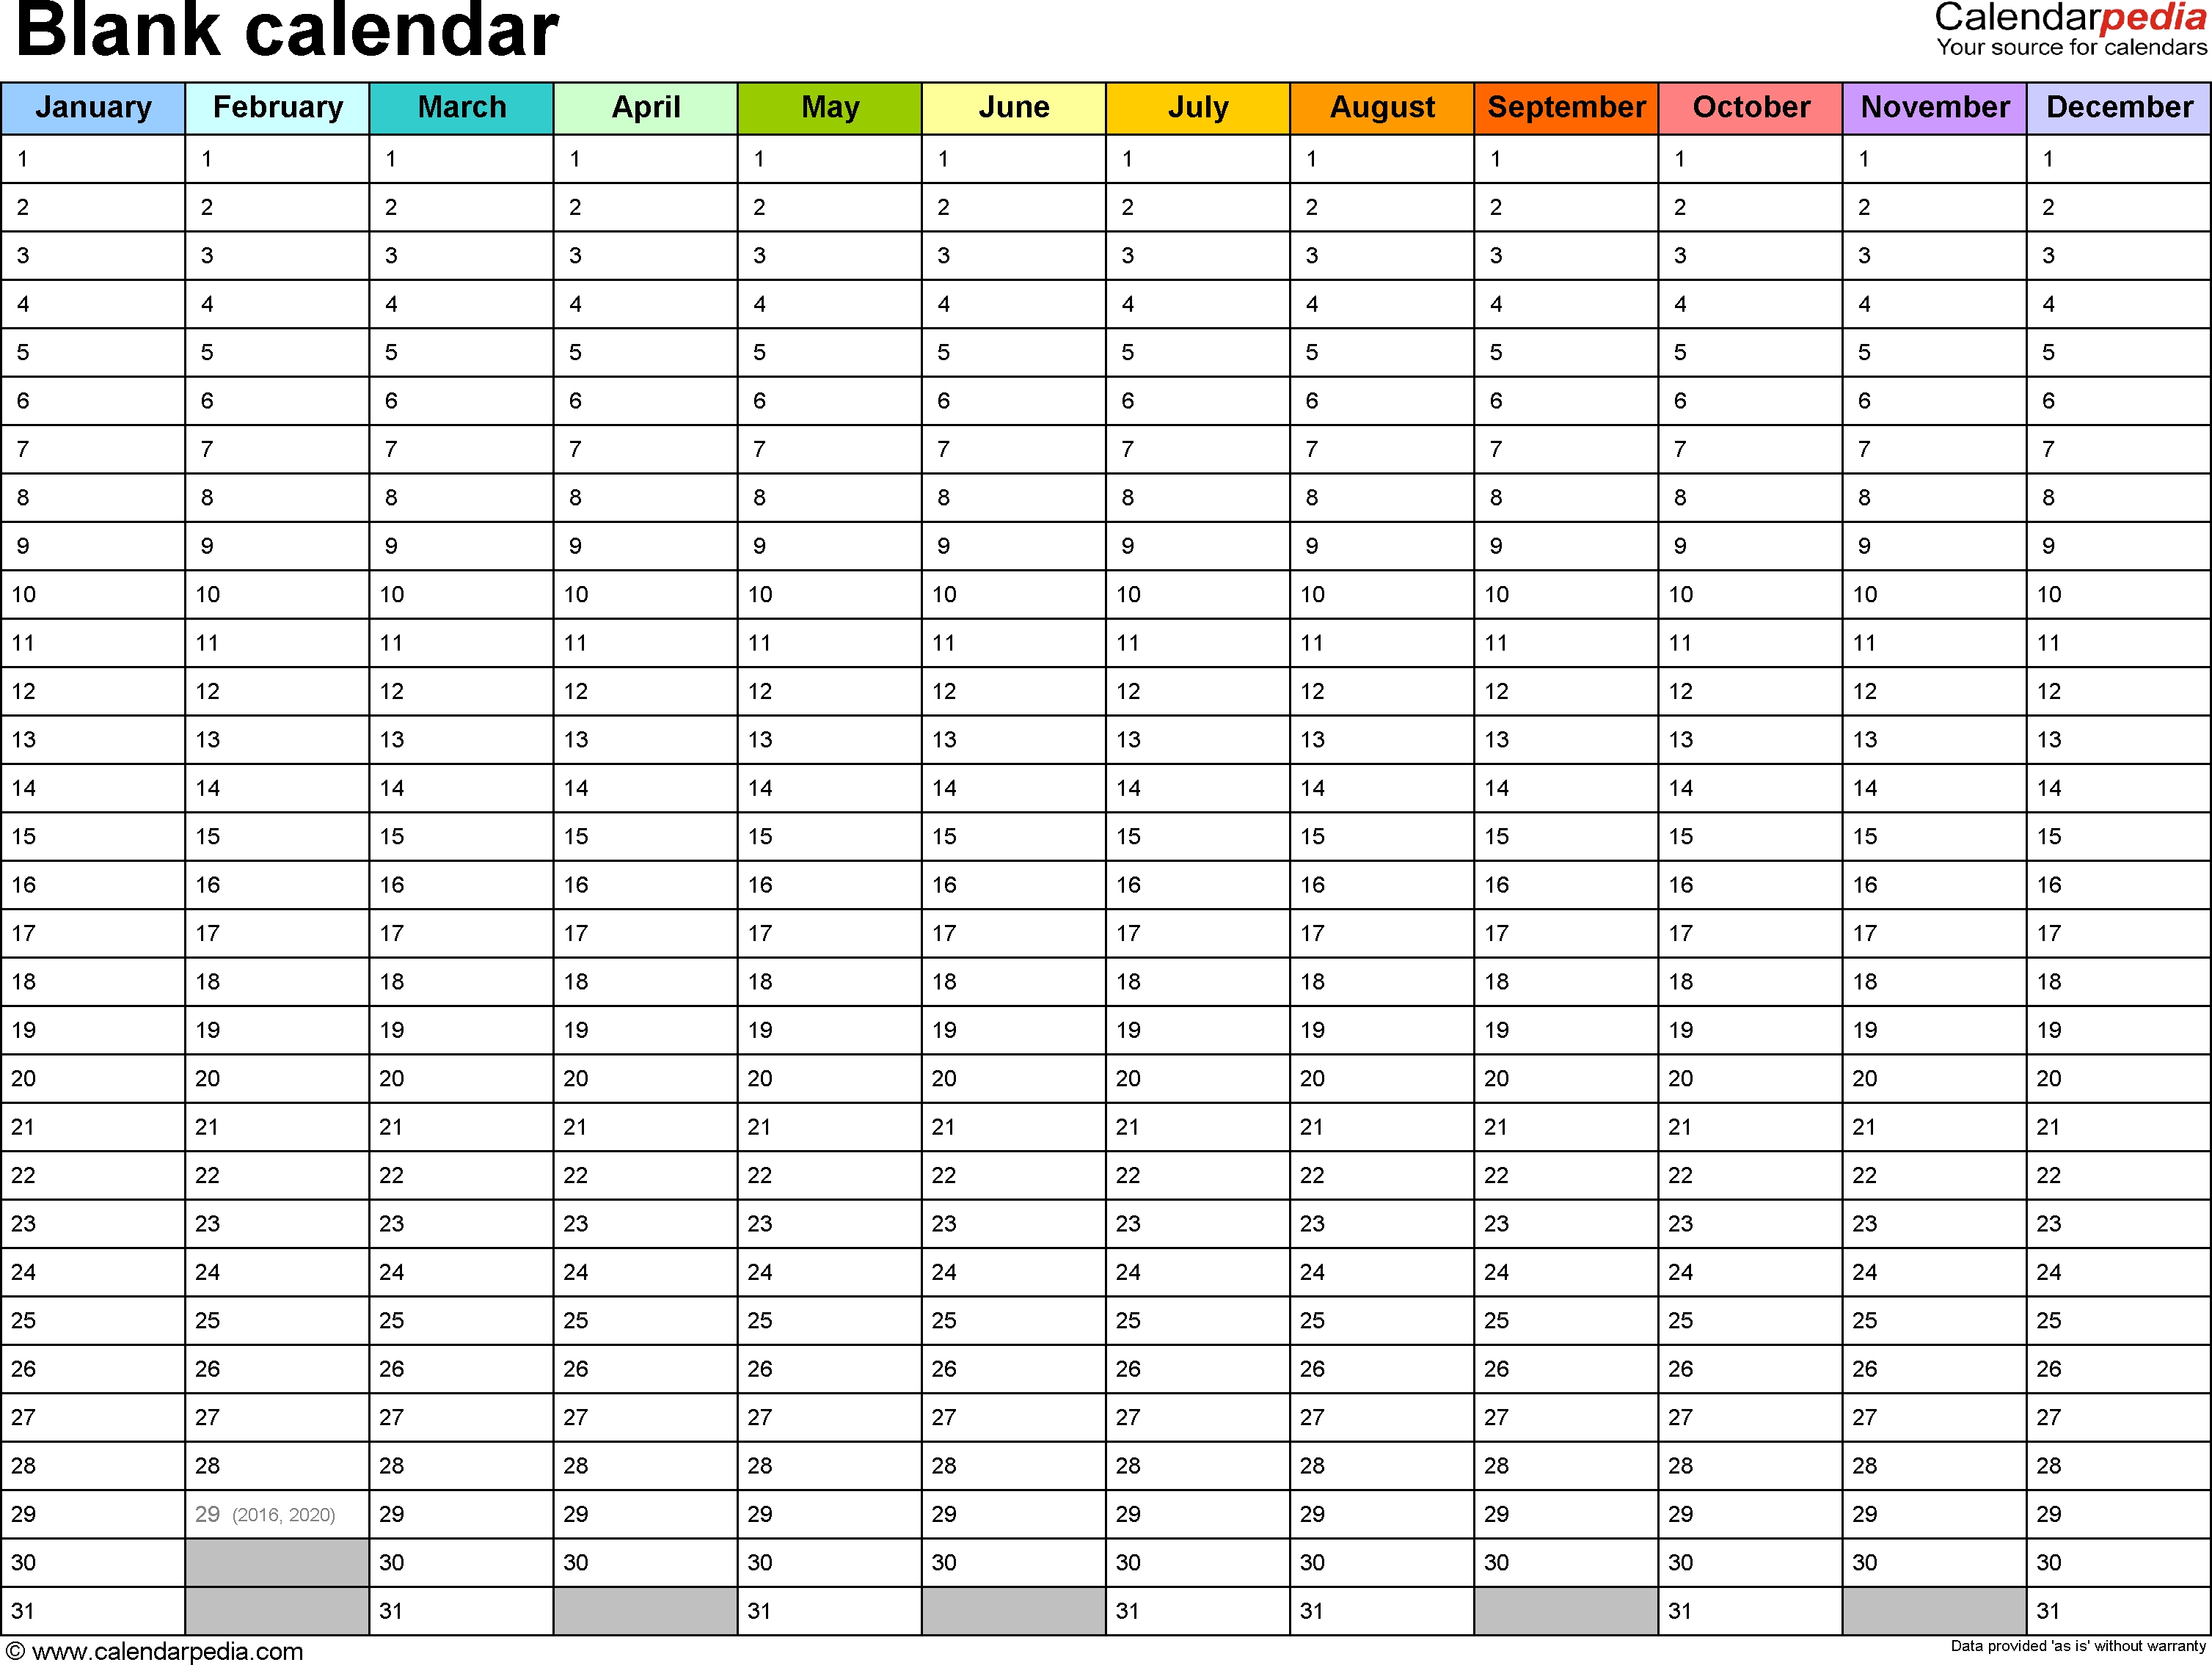 Blank Calendar - 9 Free Printable Microsoft Word Templates intended for 3 Month Planning Calendar Printable